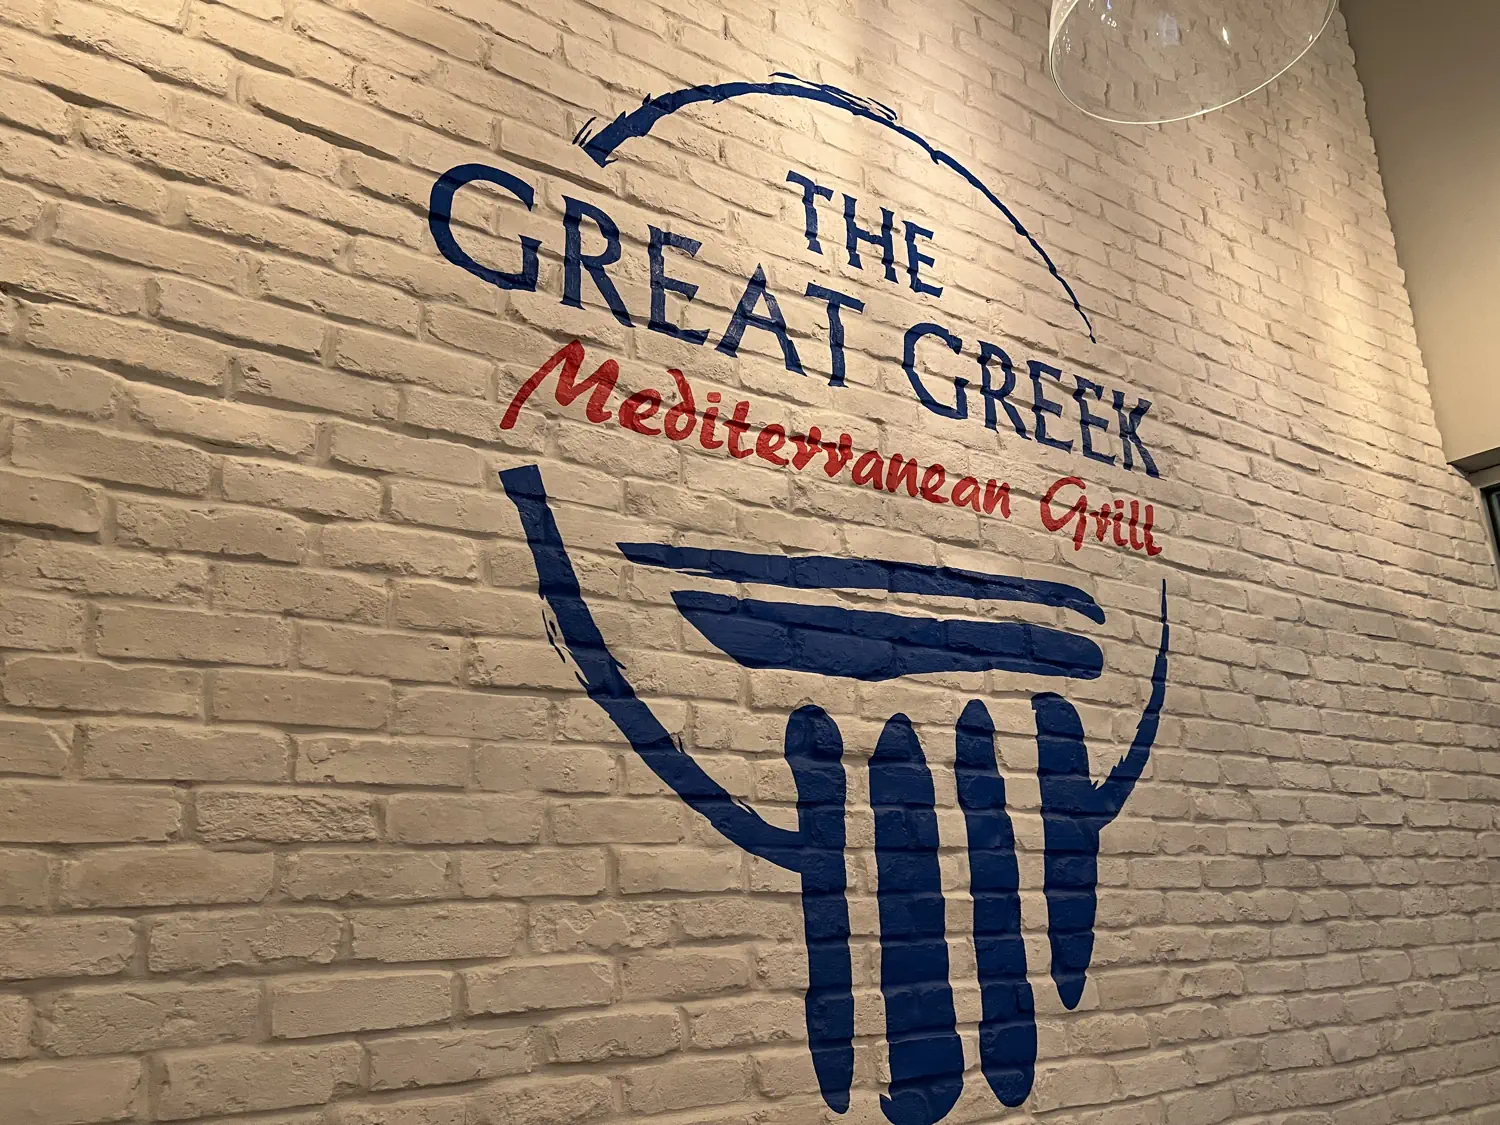 The Great Greek restaurant logo on a brick wall